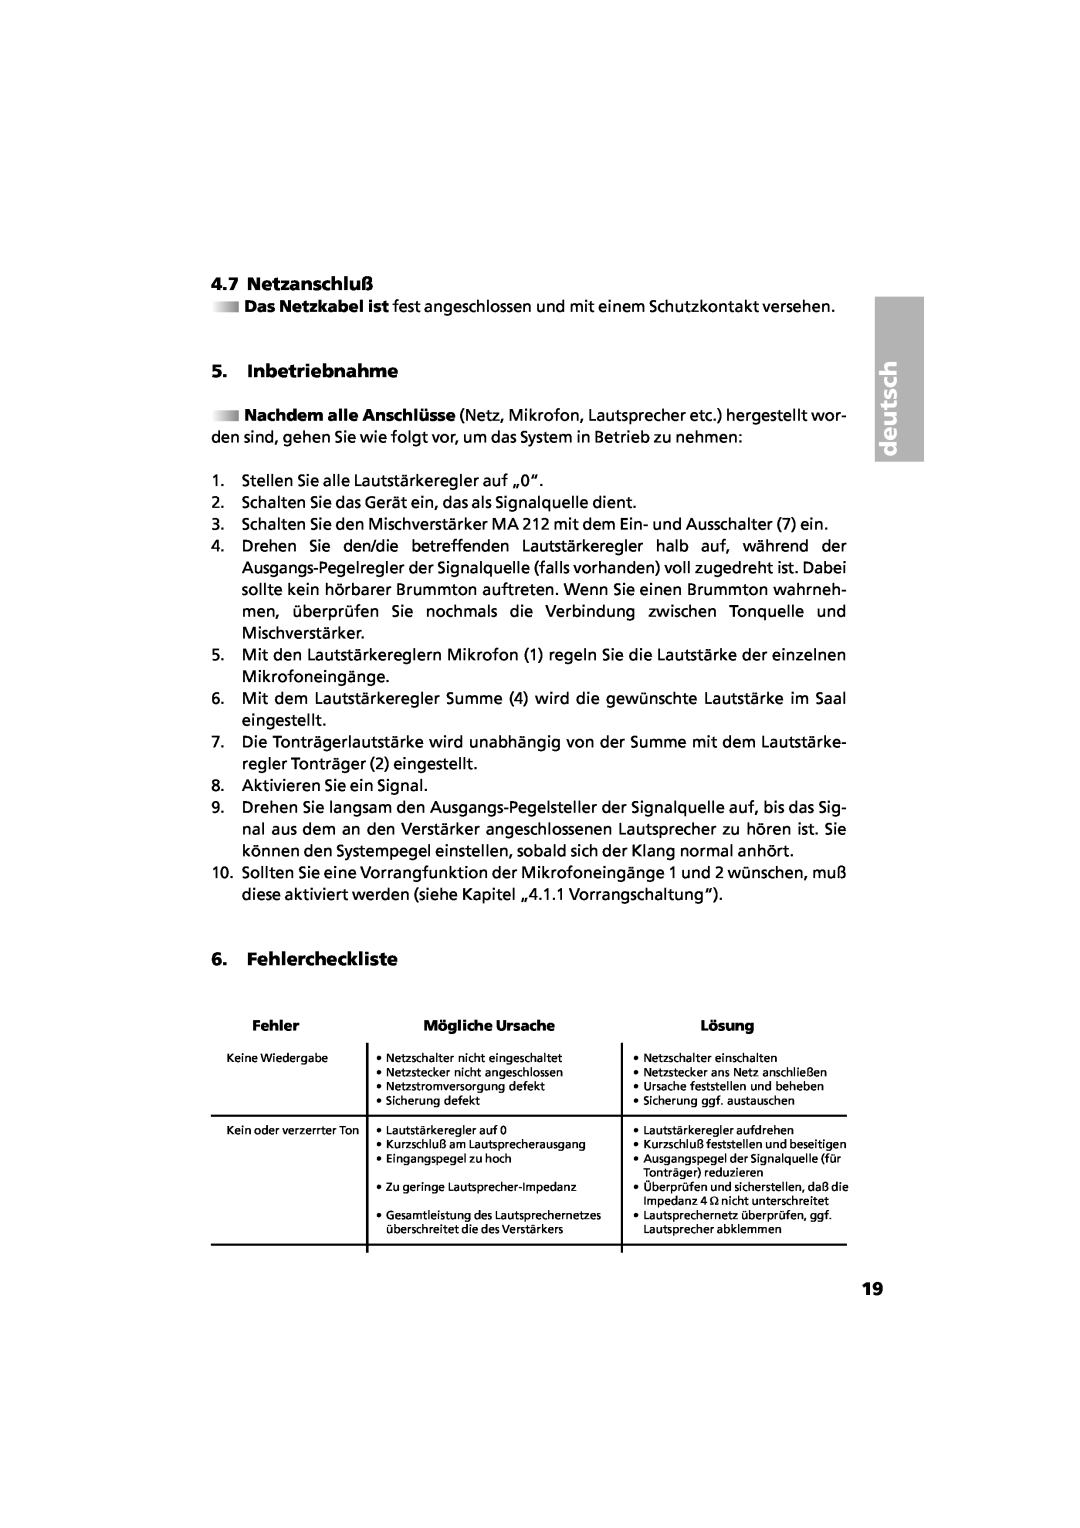 Beyerdynamic MA 206, MA 212 manual Netzanschluß, deutsch, Inbetriebnahme, Fehlercheckliste 